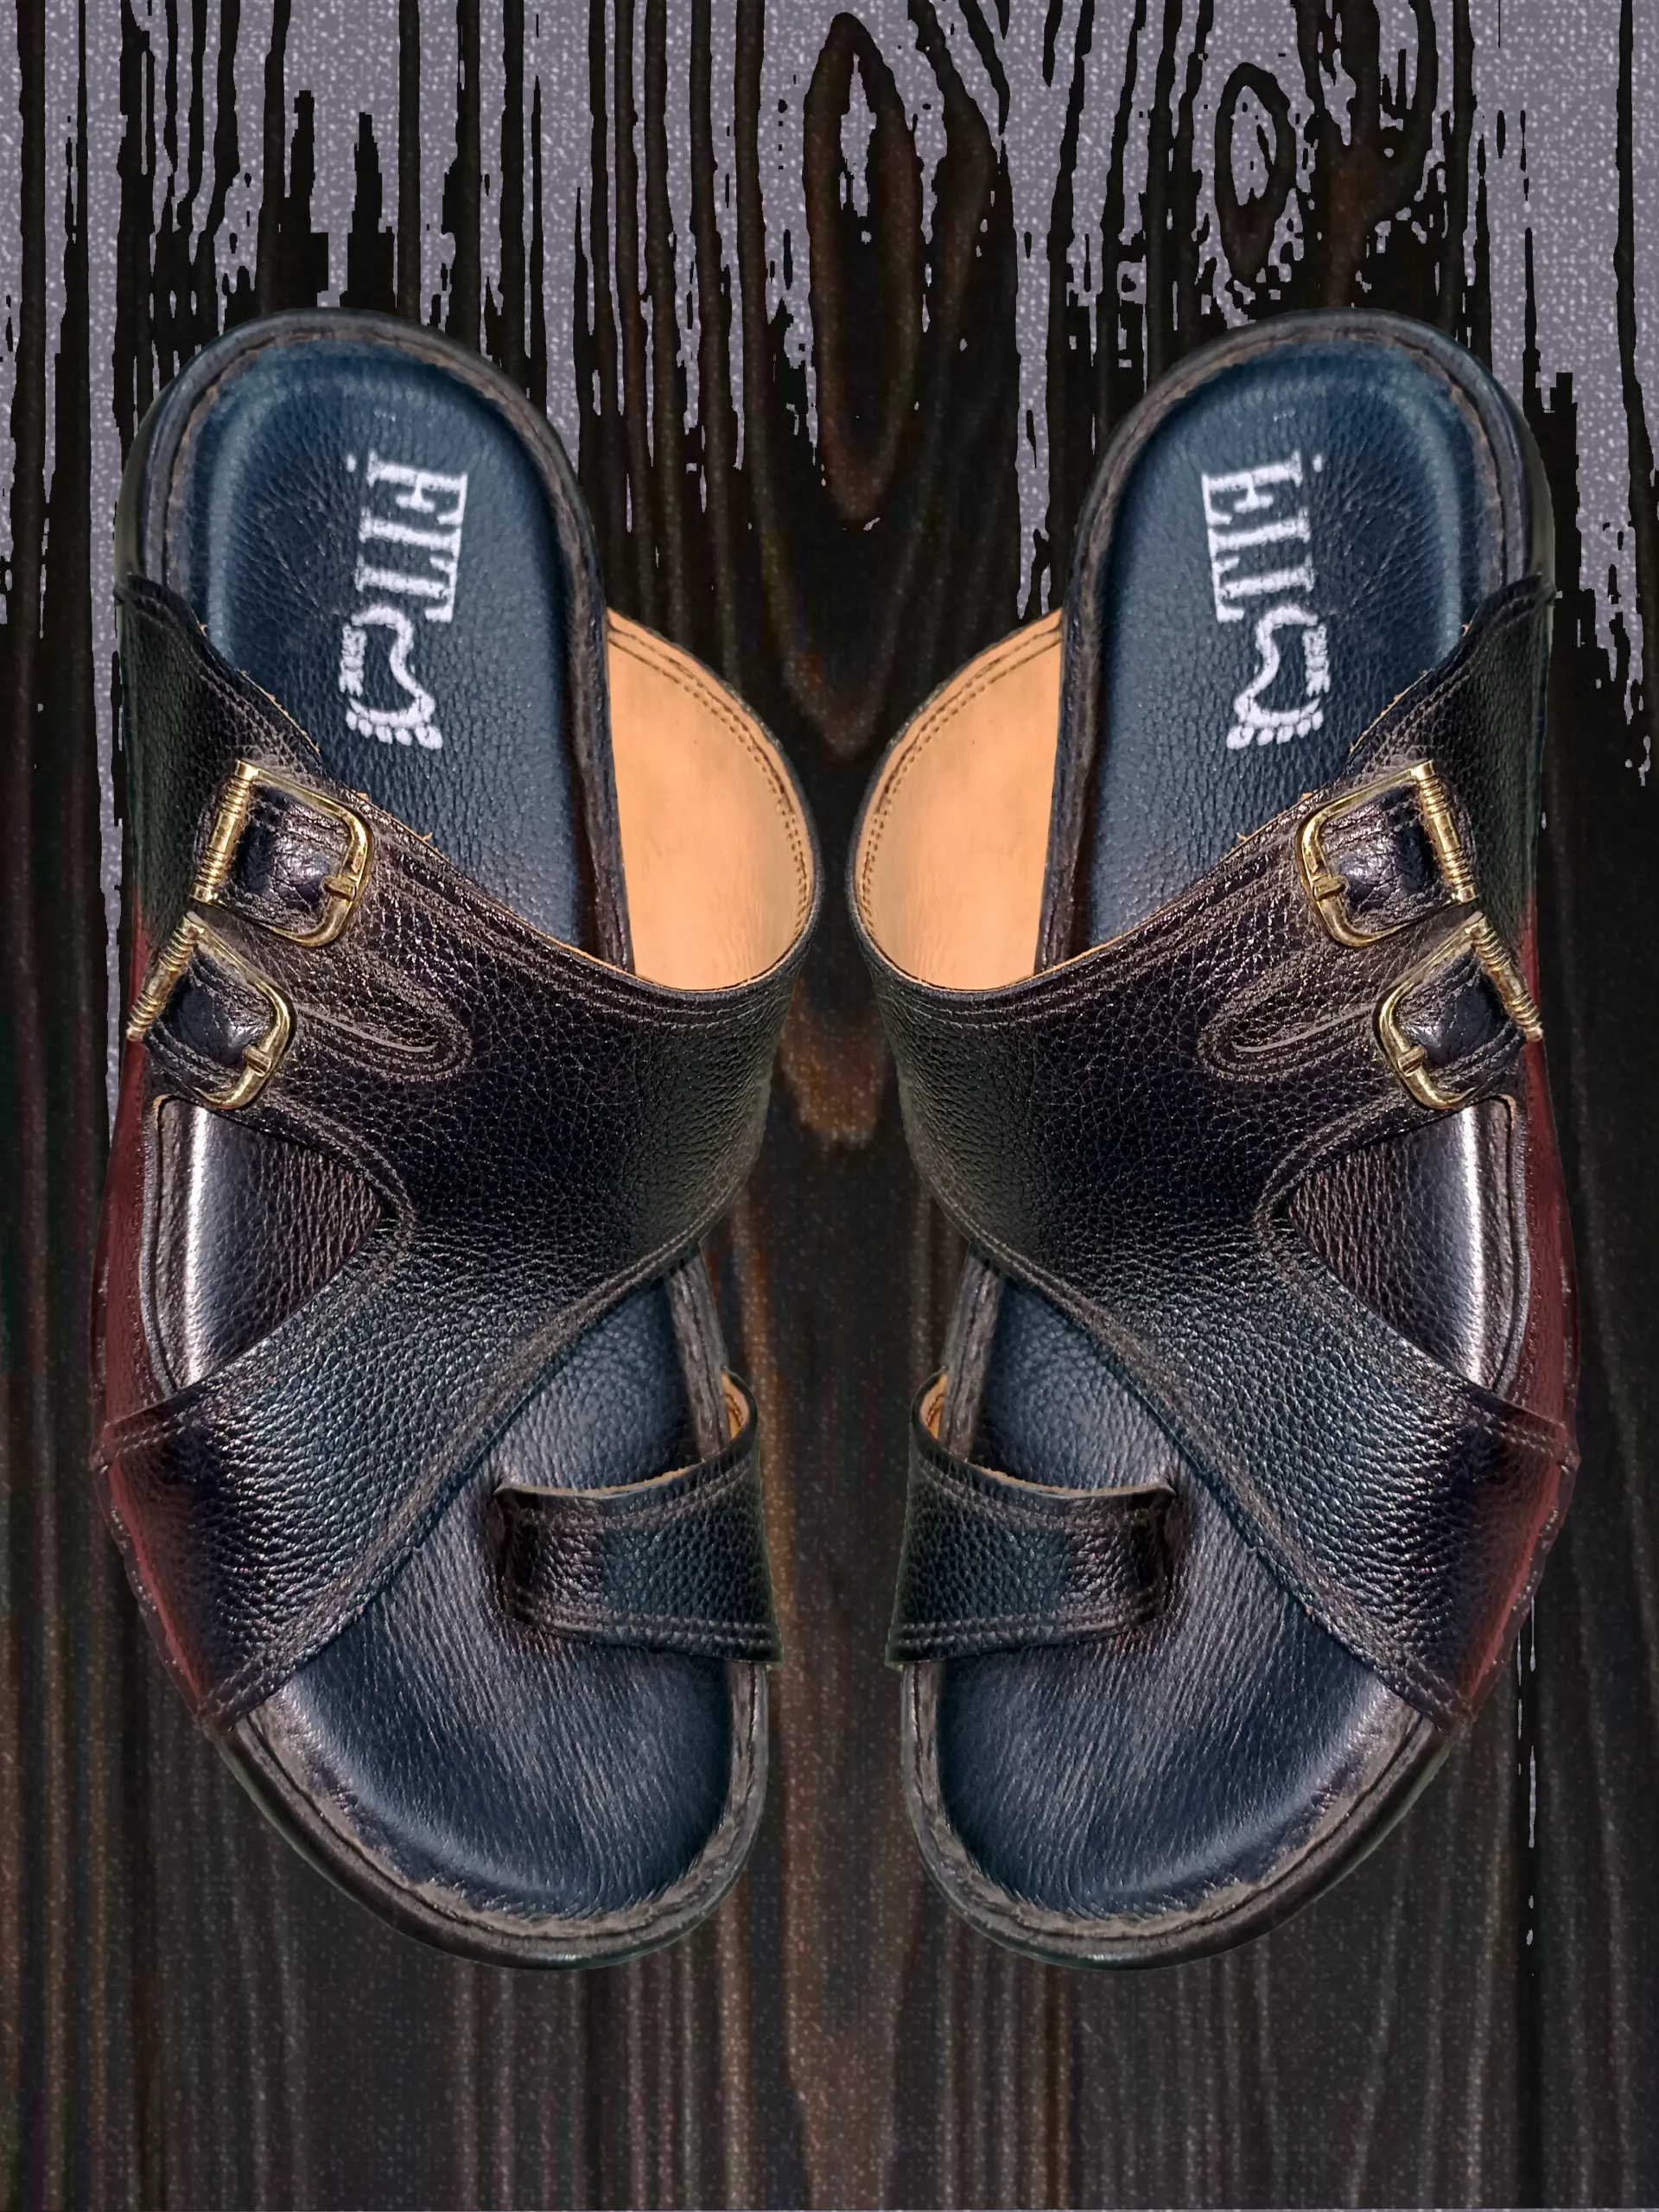 Imran Khan Style Peshawar pure leather Sandal from Pakistan | eBay